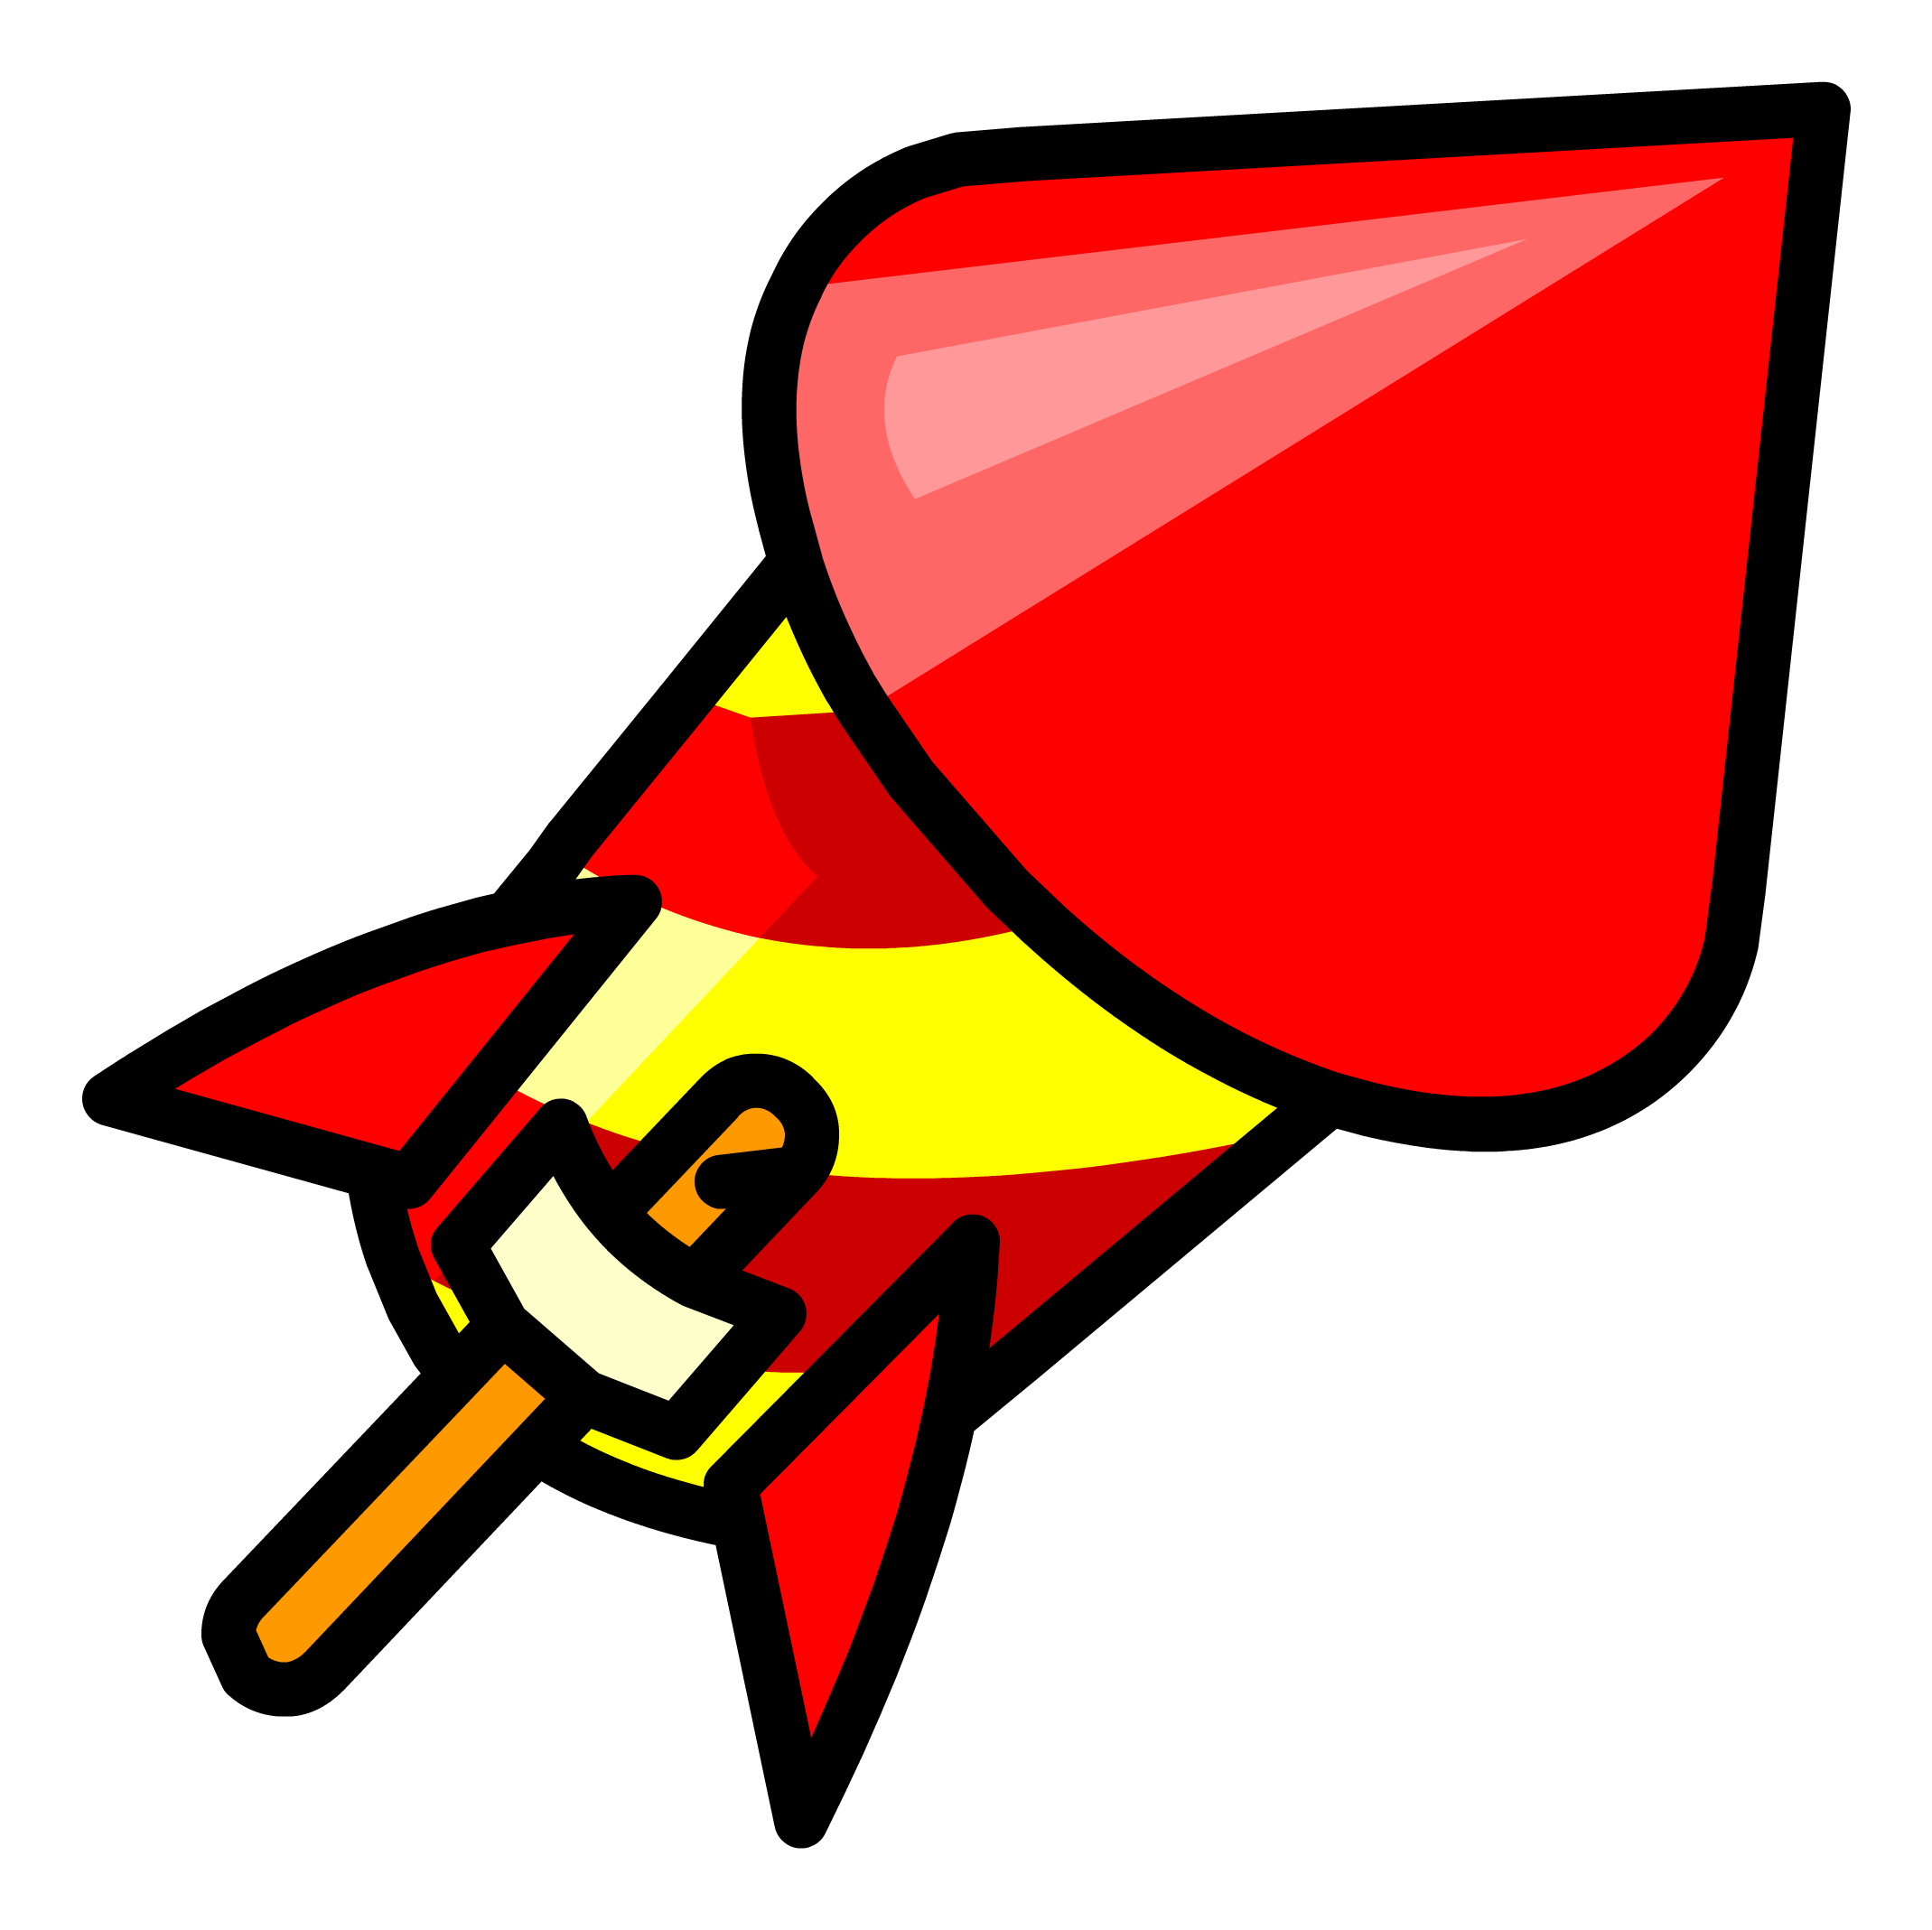 Firework Rocket Pin | Club Penguin Wiki | Fandom powered by Wikia